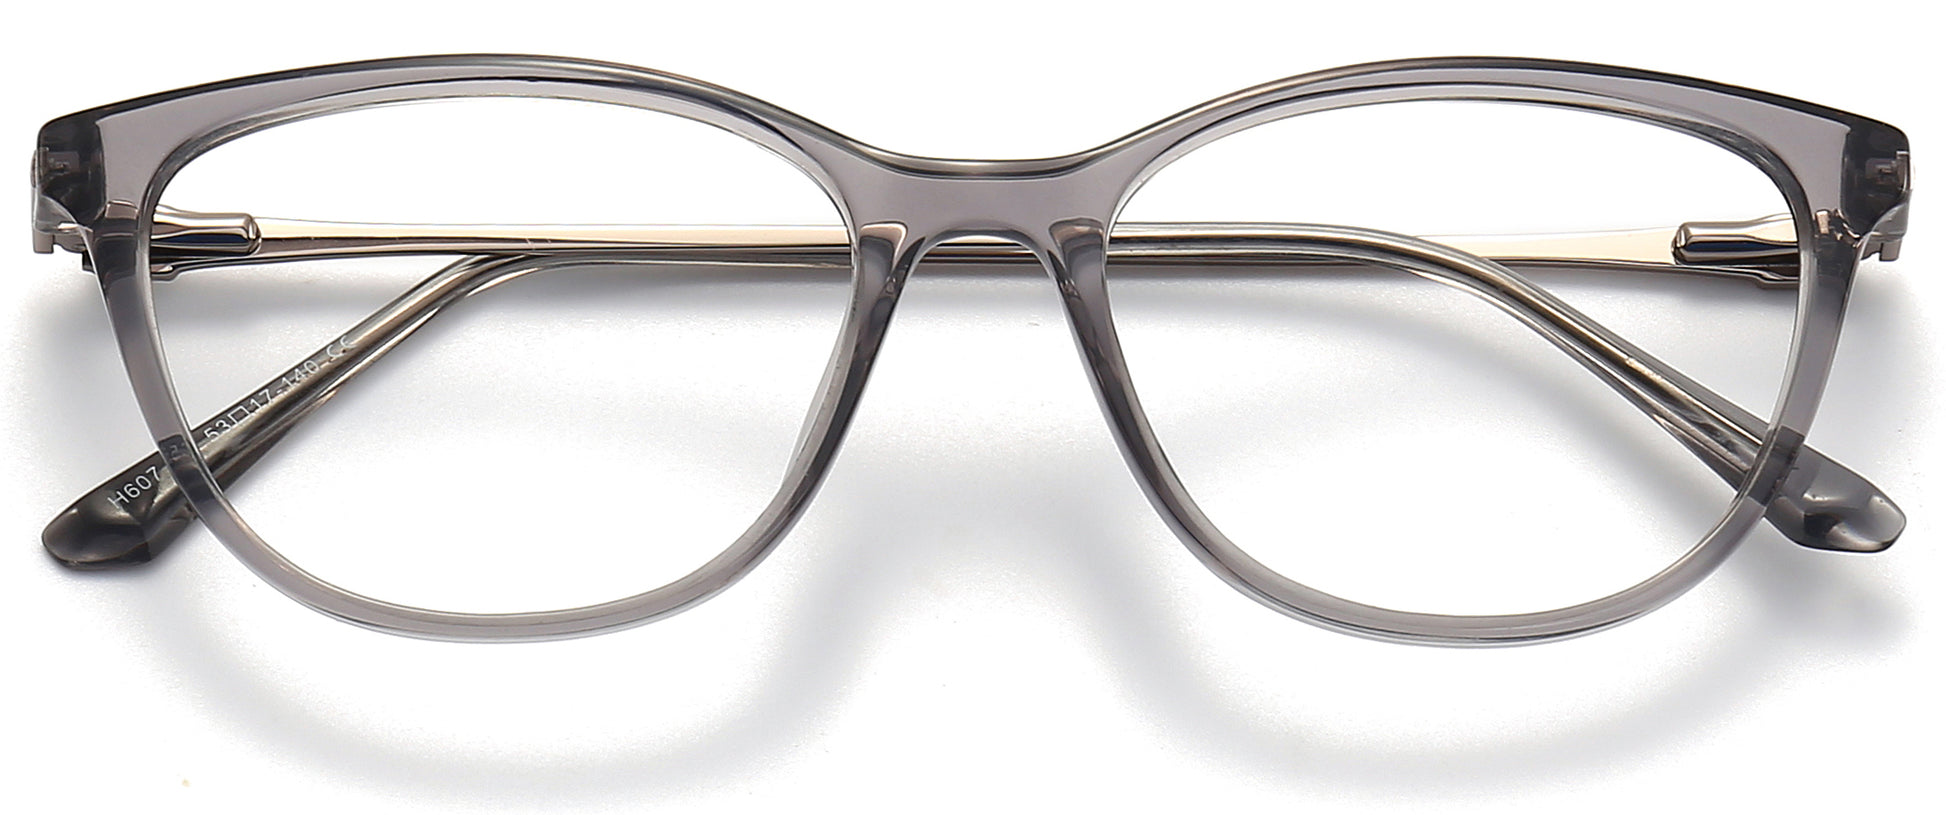 Teresa Cateye Gray Eyeglasses from ANRRI, closed view